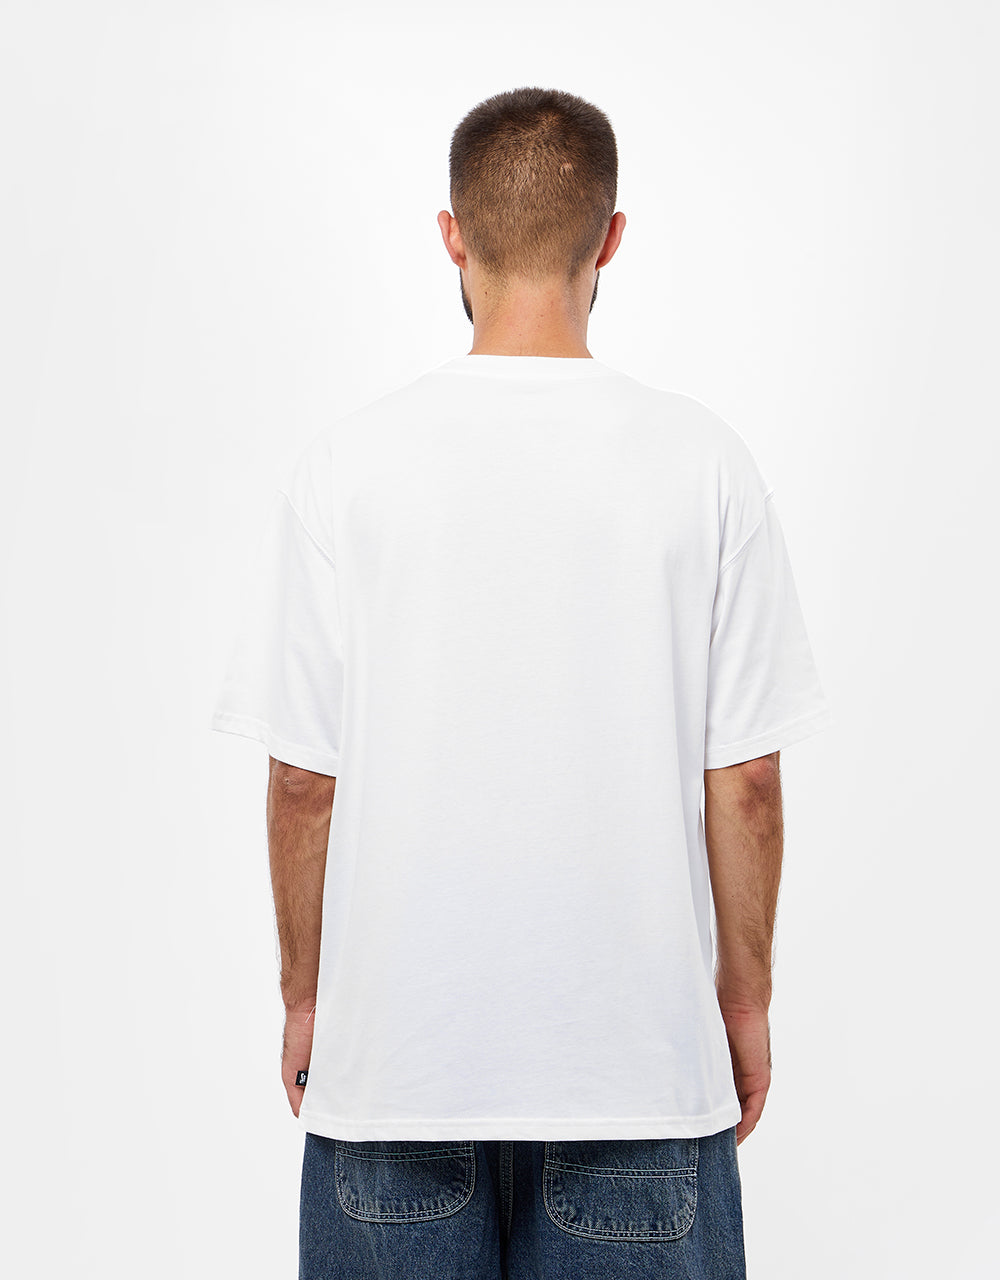 Nike SB Hammers T-Shirt - White